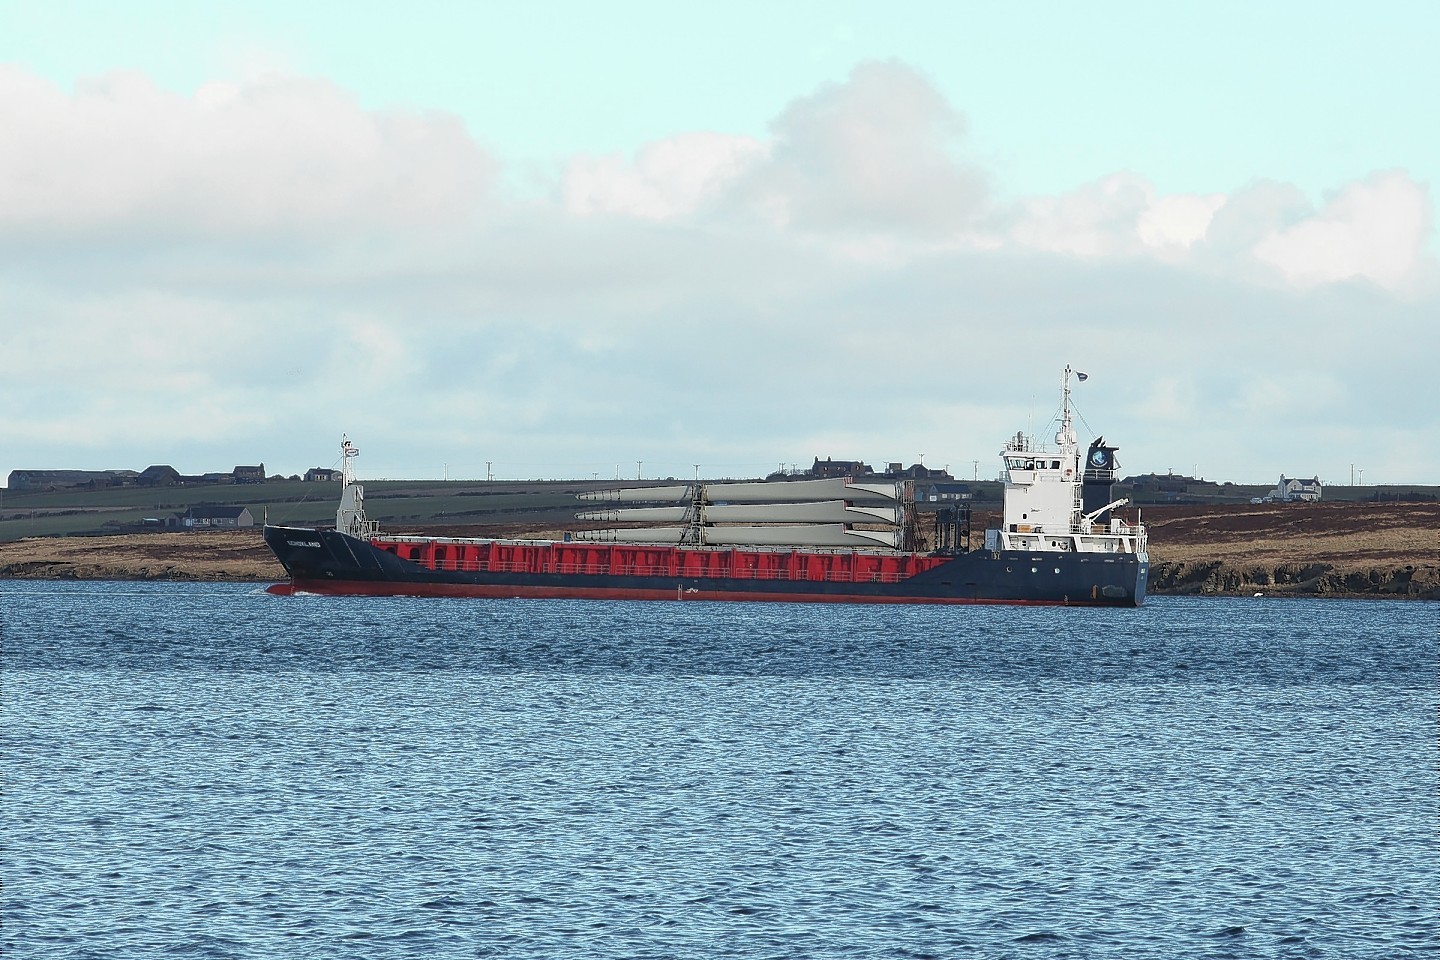 The Orkney Islands Tug MV Einar towing the stricken Netherlands registrated  MV Schokland